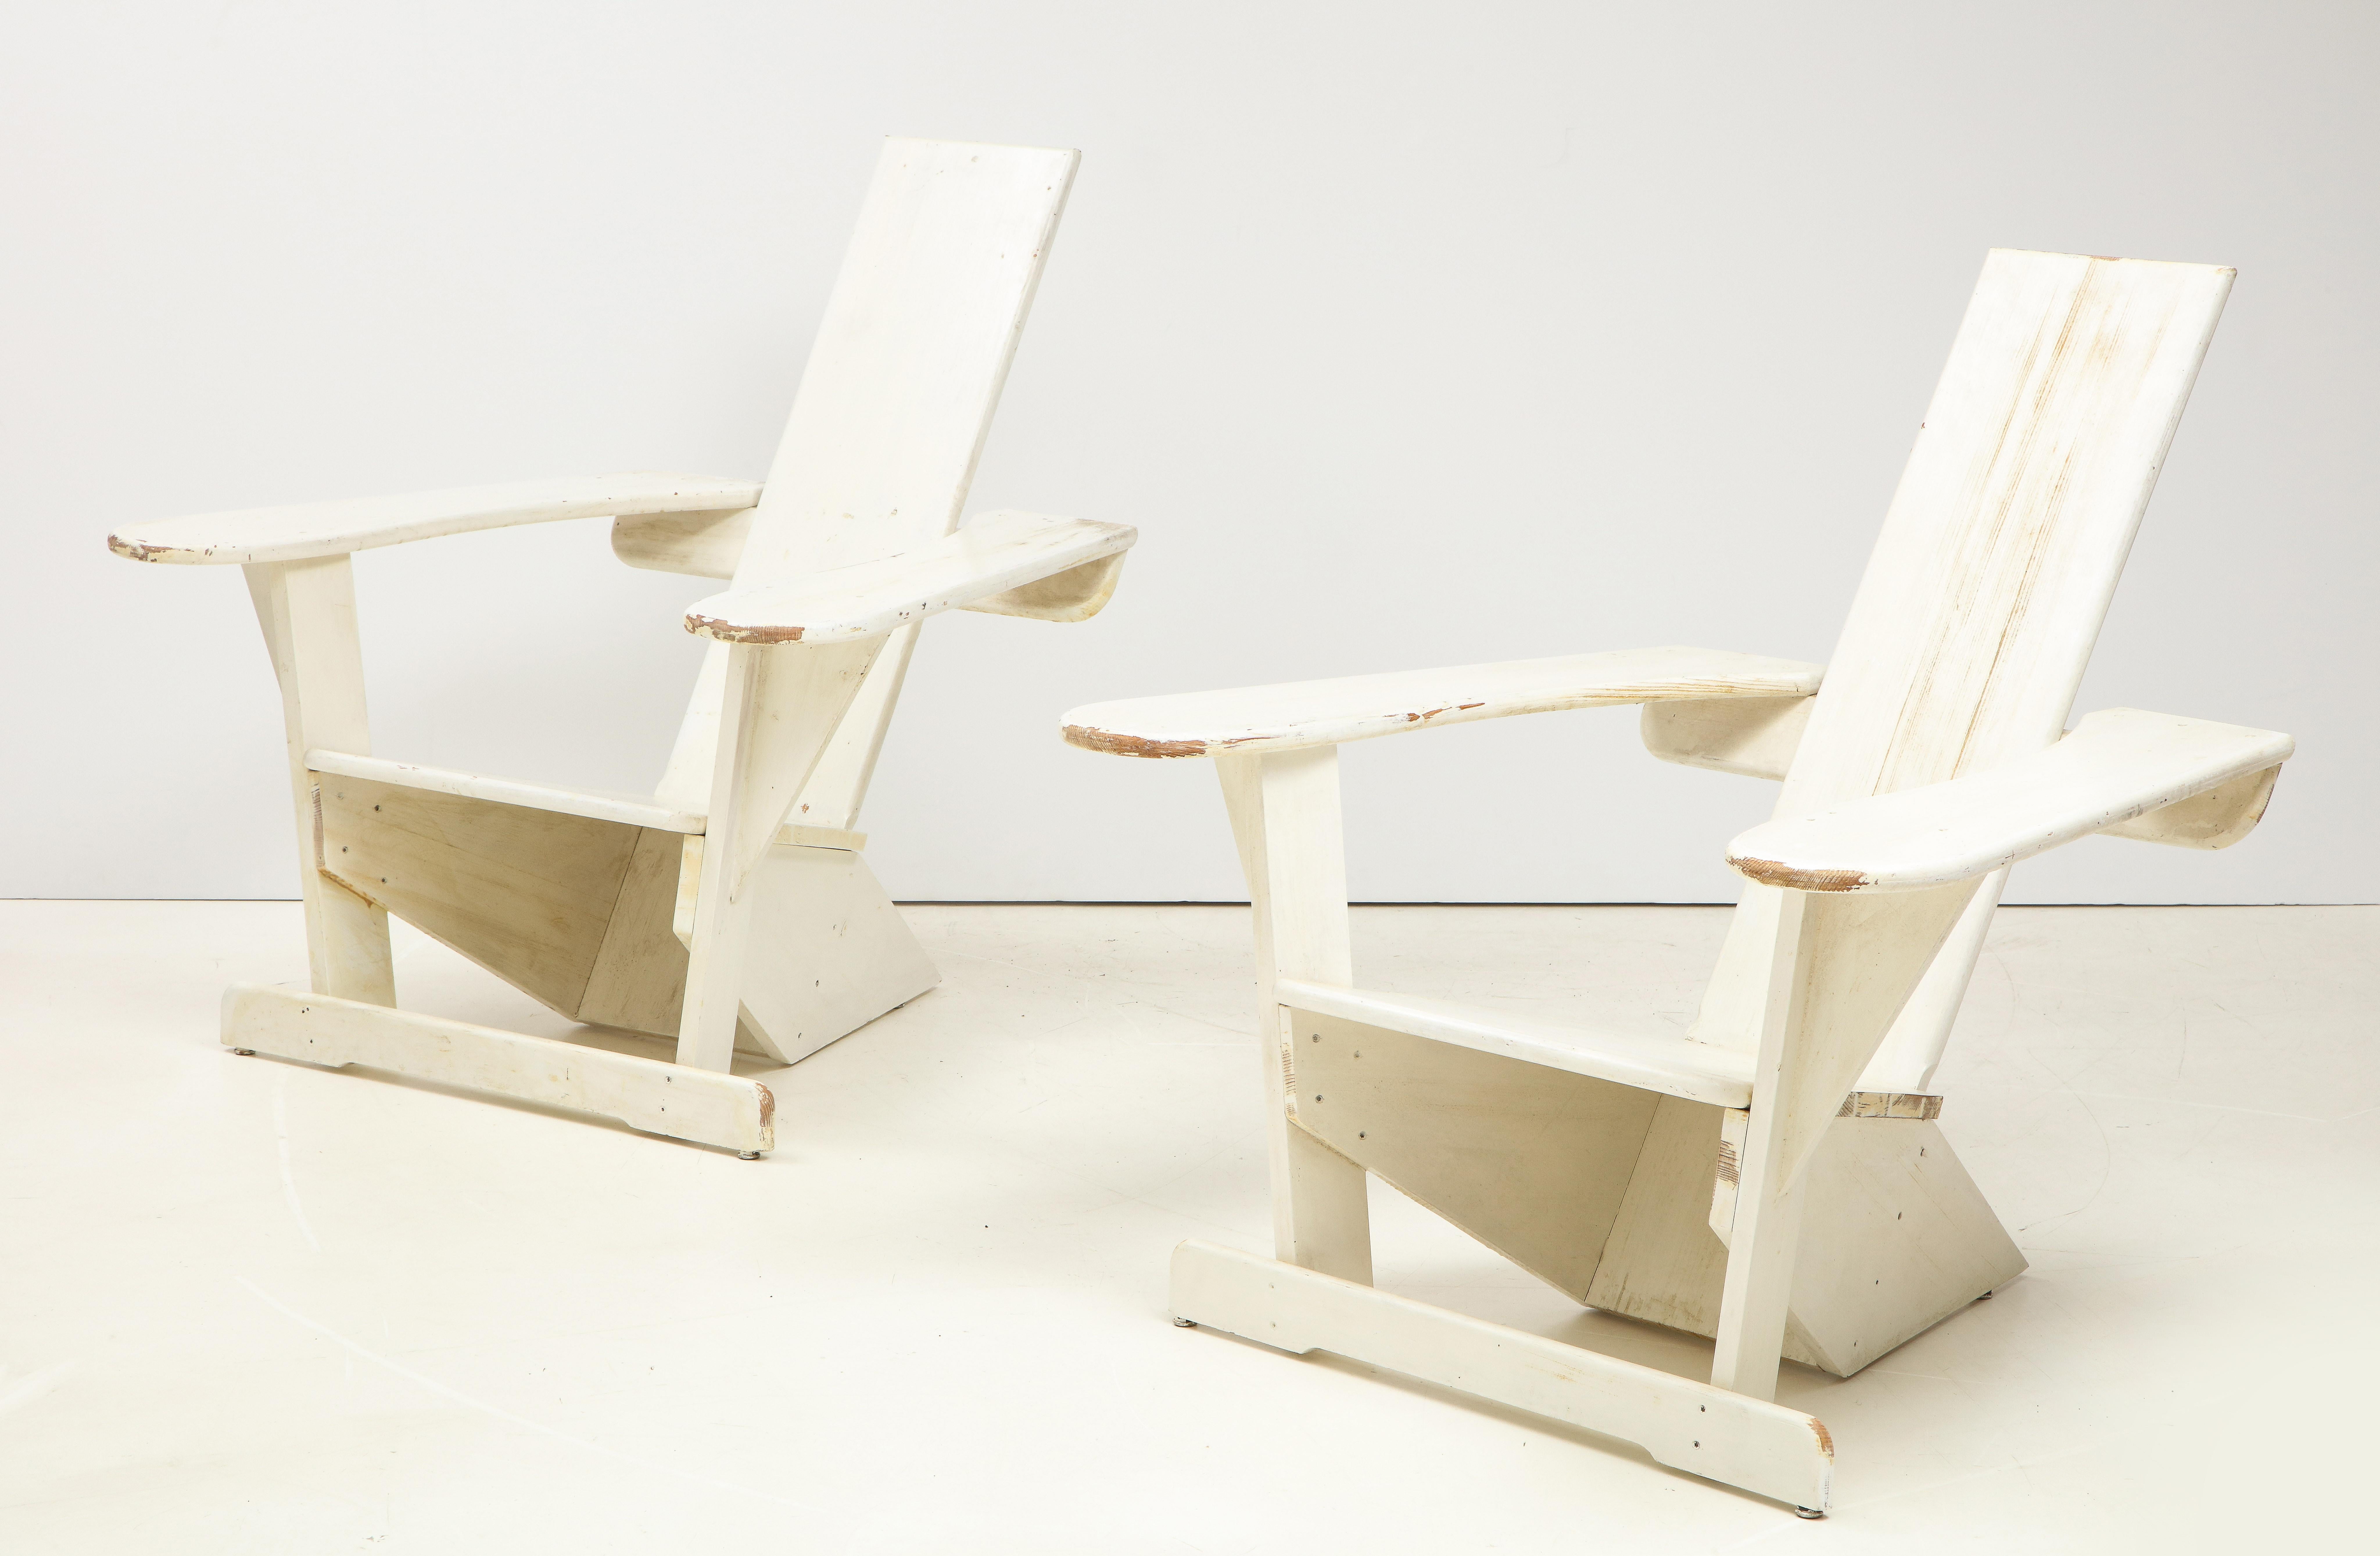 Wood Pair of Chairs after Pierre Dariel, ‘Biarrtiz’ model, France, c. 1926